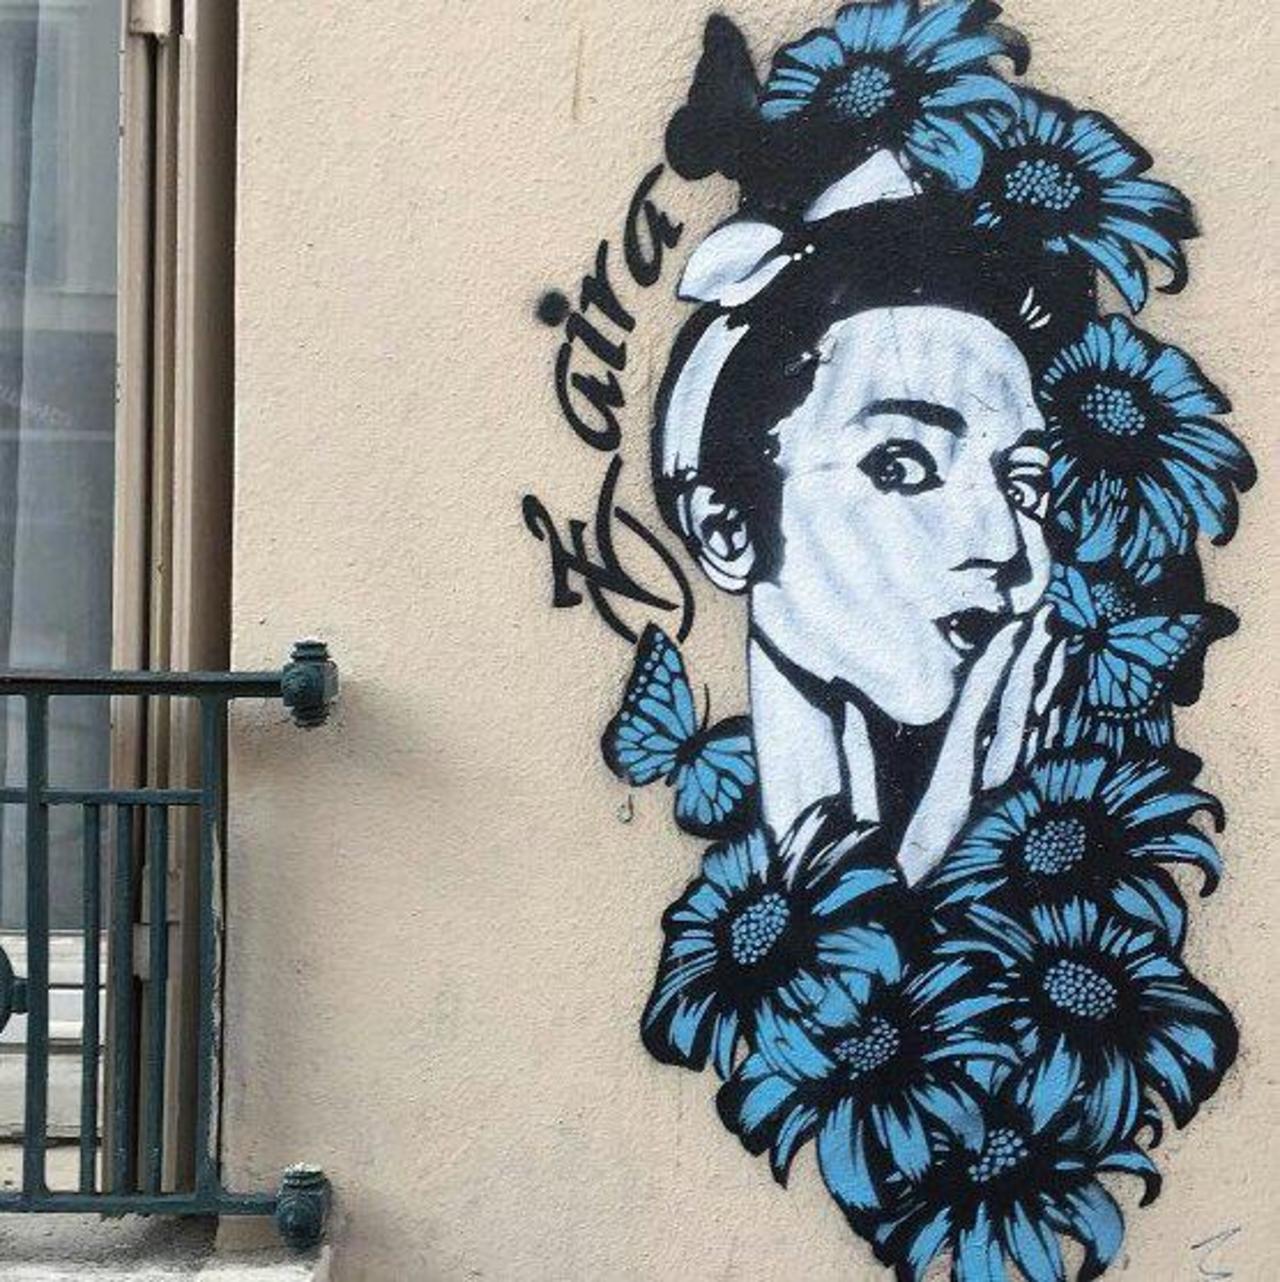 #Paris #graffiti photo by @senyorerre http://ift.tt/1jBdmR0 #StreetArt http://t.co/DnTMlSlI3j